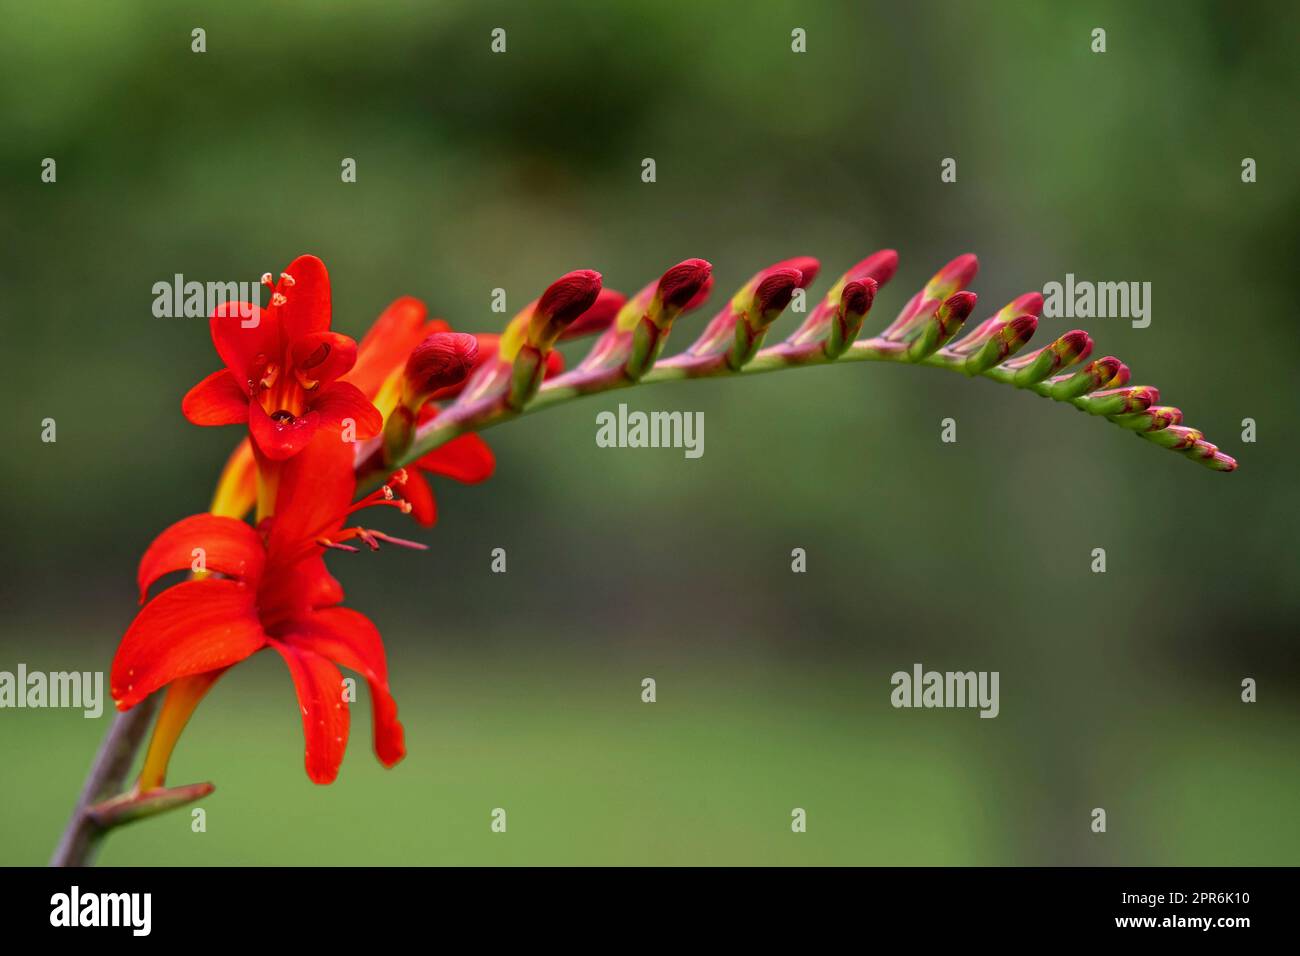 Crocosmia Blütenspitze mit offenen roten Blüten und Knospen Stockfoto